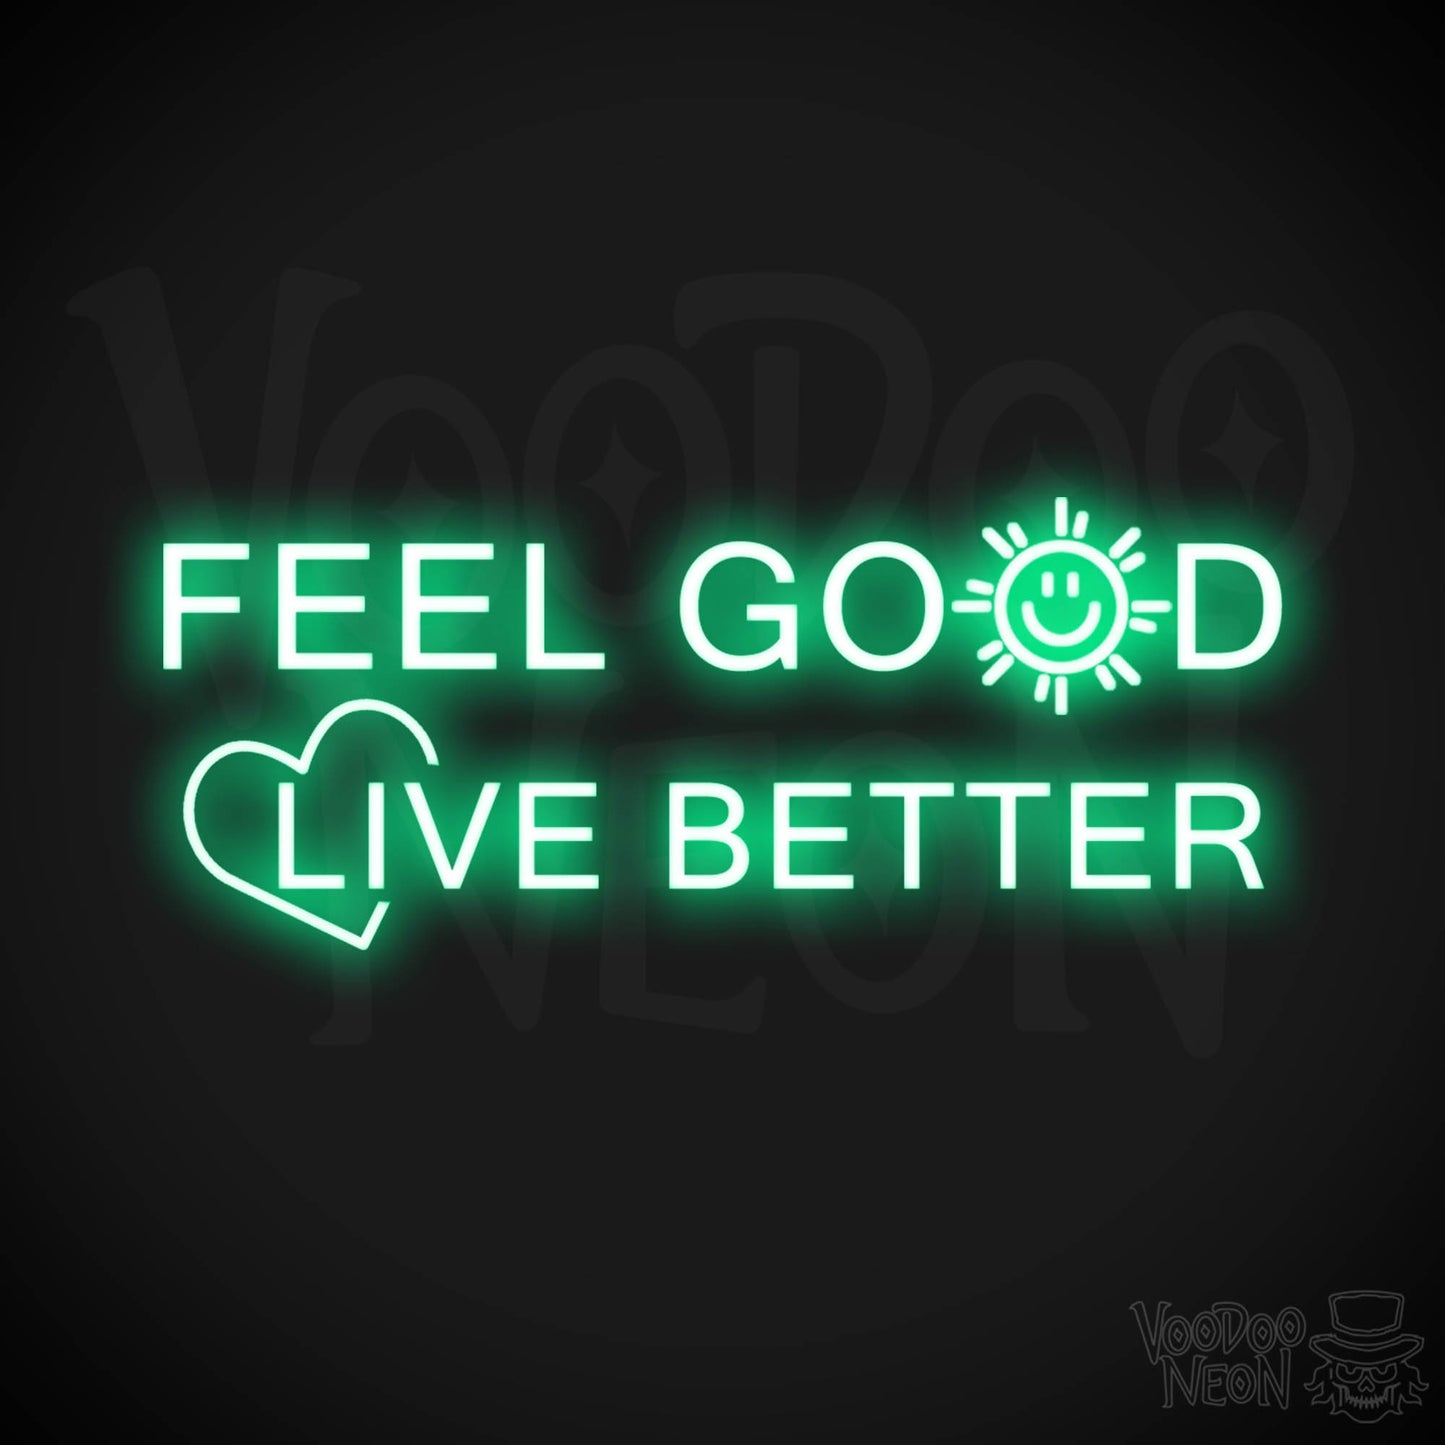 Feel Good Live Better Neon Sign - Feel Good Live Better Sign - Color Green